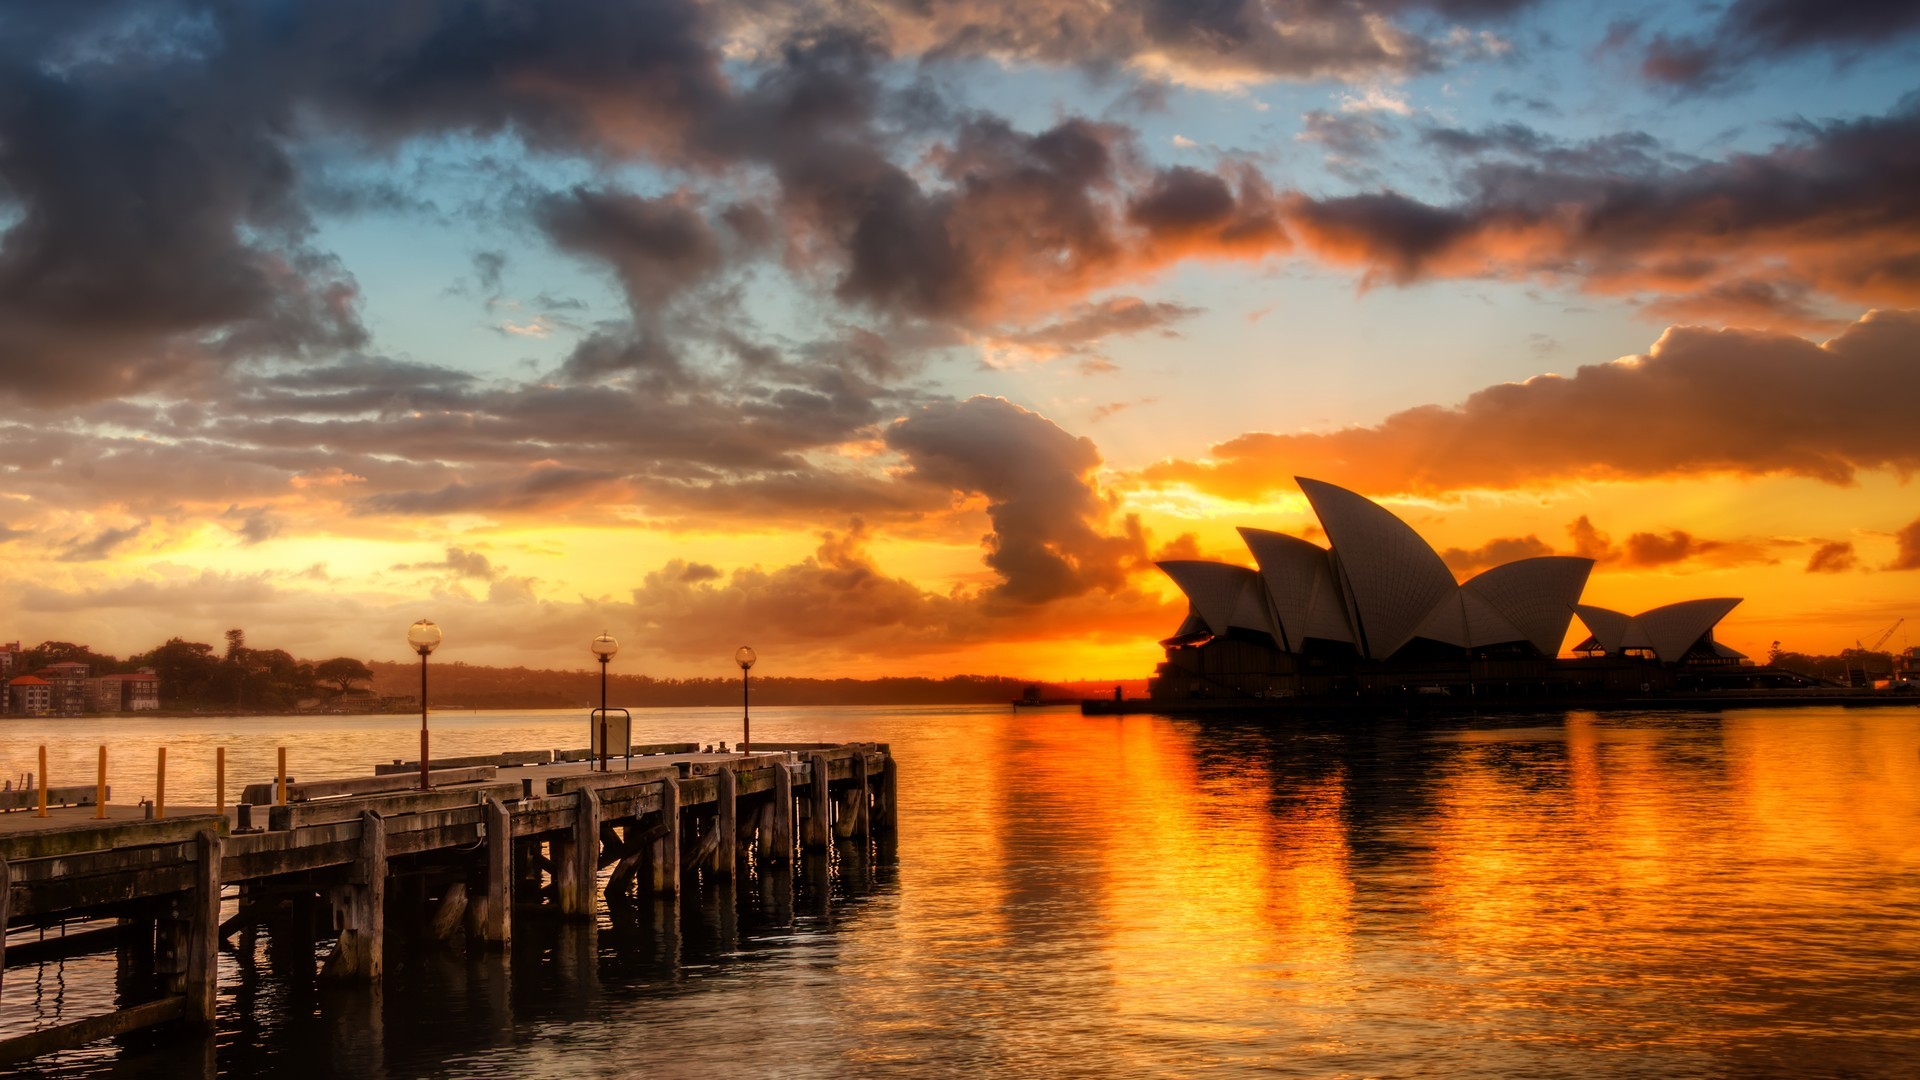 General 1920x1080 Sydney Opera House sunset Sydney Australia sunlight sea pier clouds sky building water